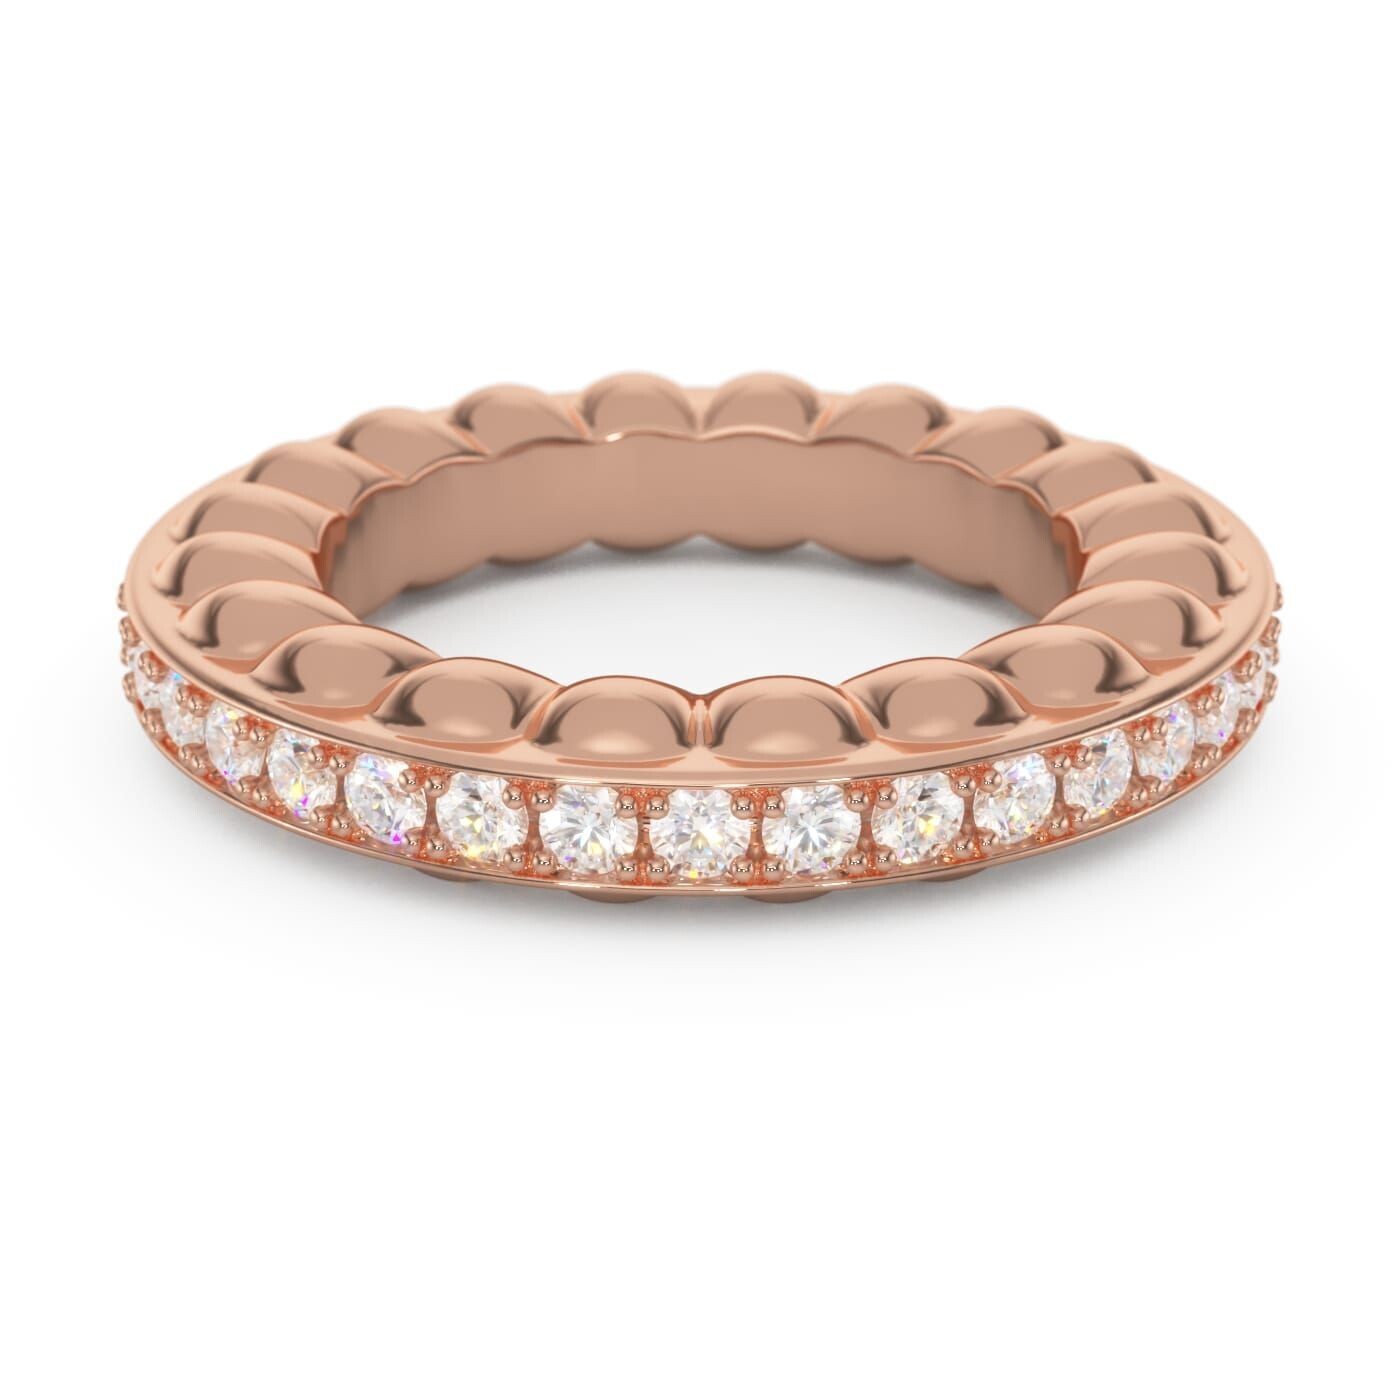 Orbits Eternity Diamond Ring, Pink Gold